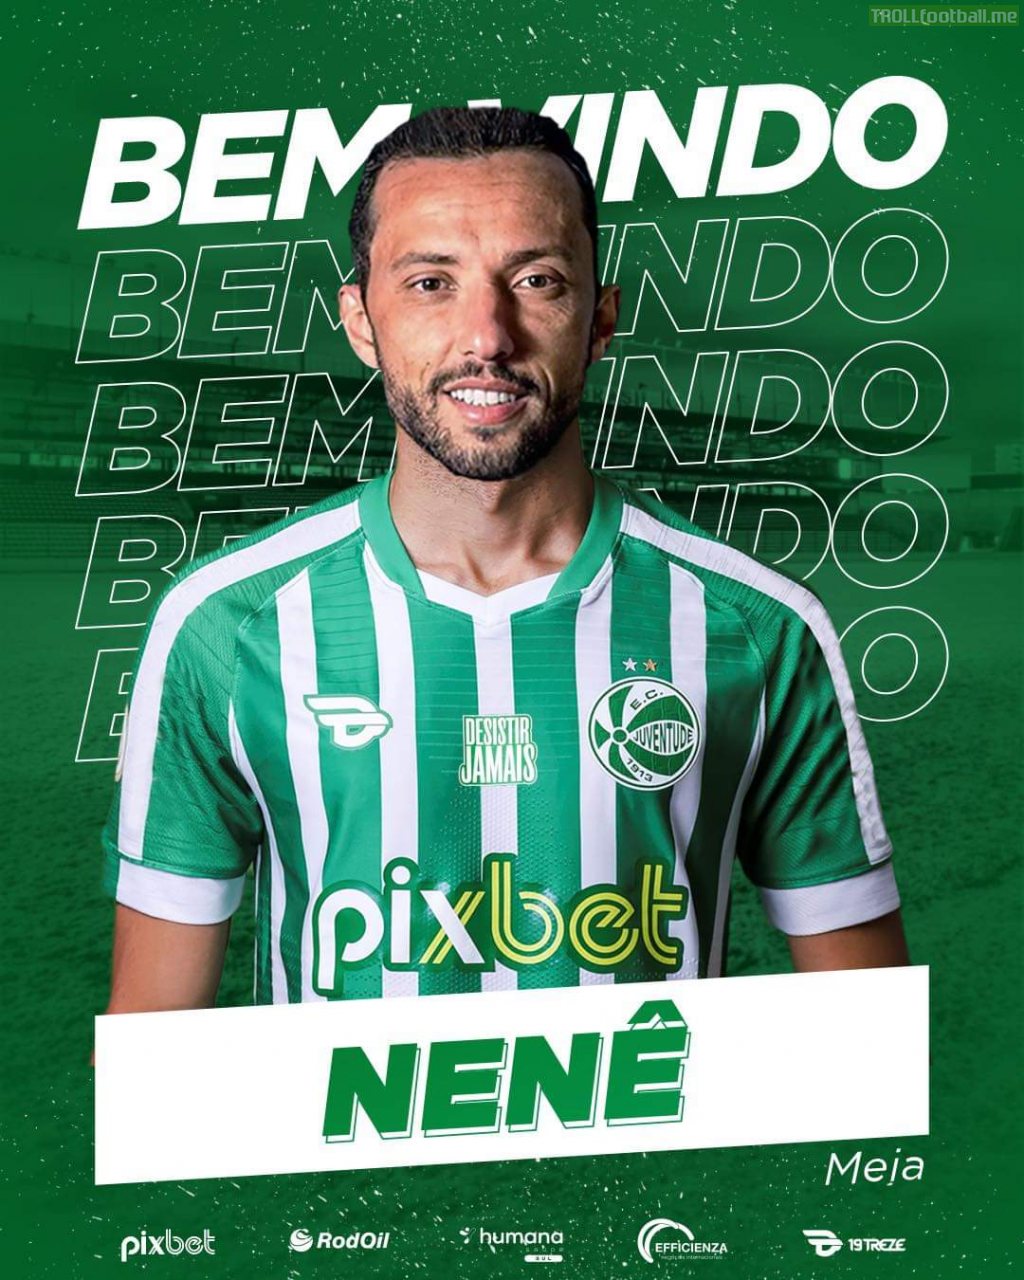 Nenê, 41 years old, ex PSG, Monaco, Celta Vigo, West Ham player, joins Juventude in Serie B